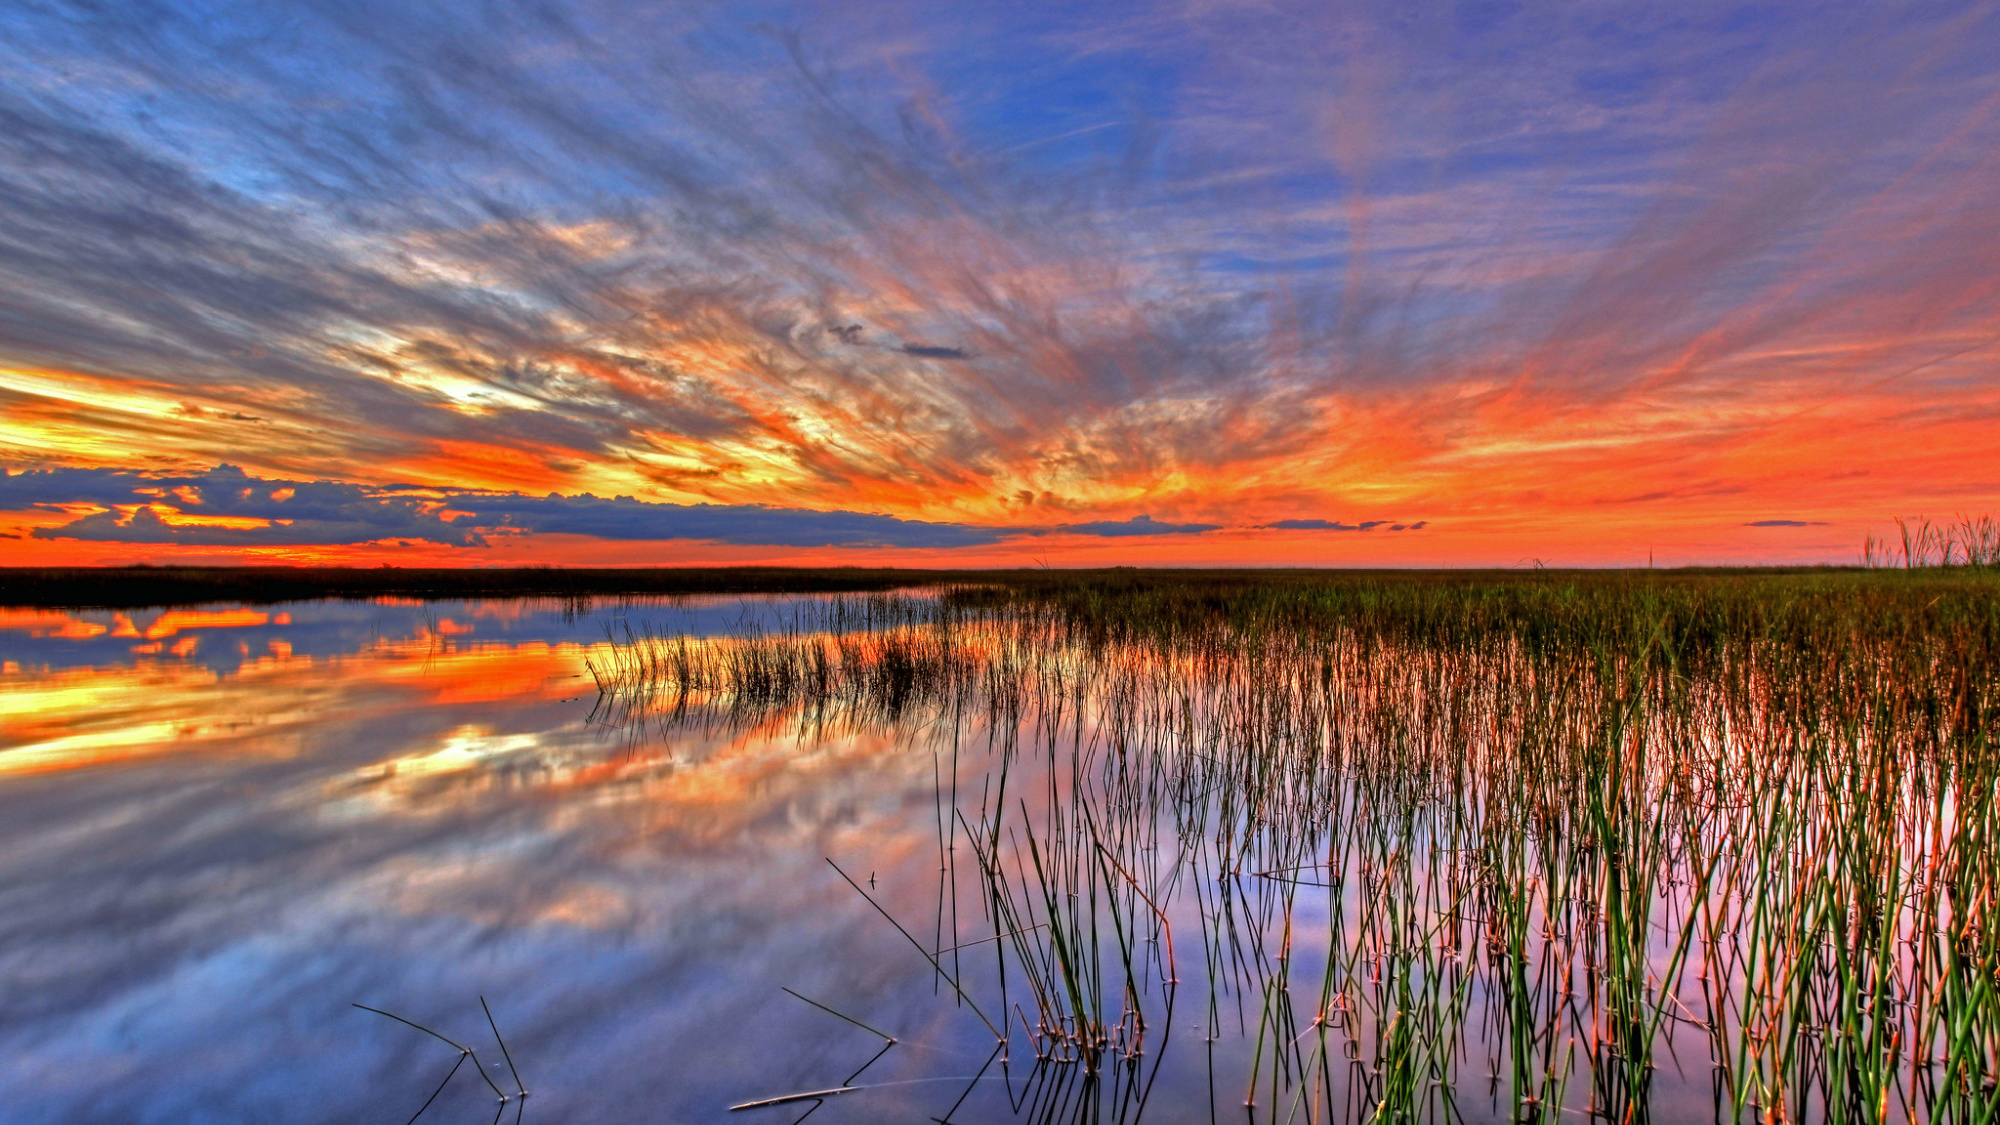 A sunset over the Florida Everglades.